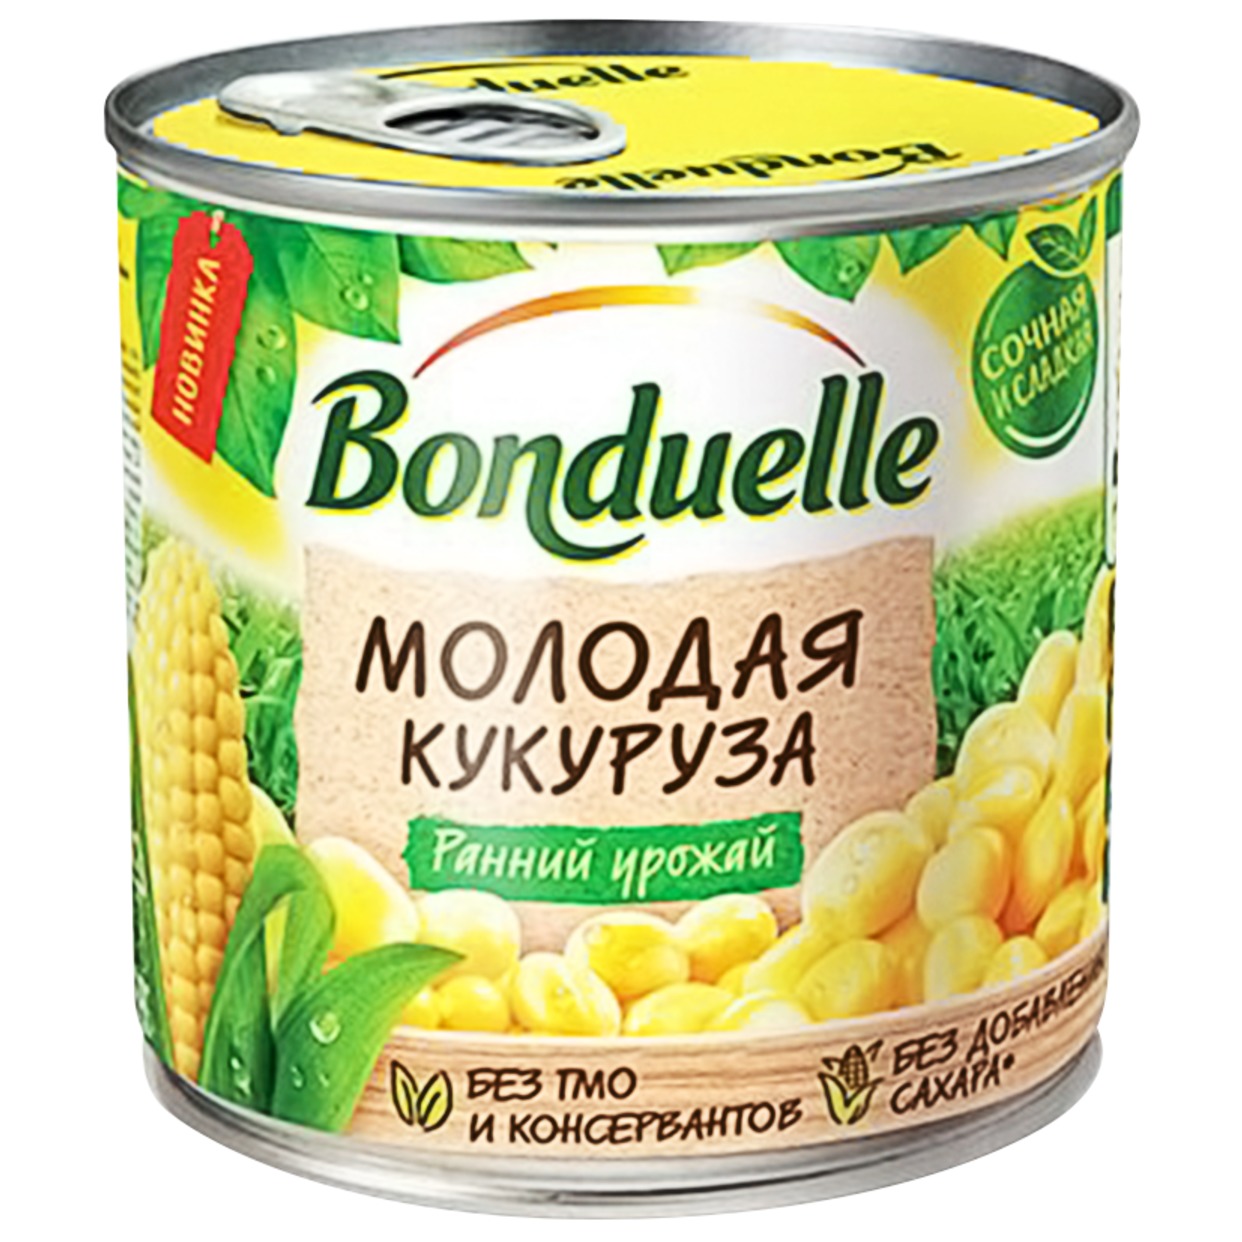 Кукуруза Bonduelle, молодая, 212 мл по акции в Пятерочке